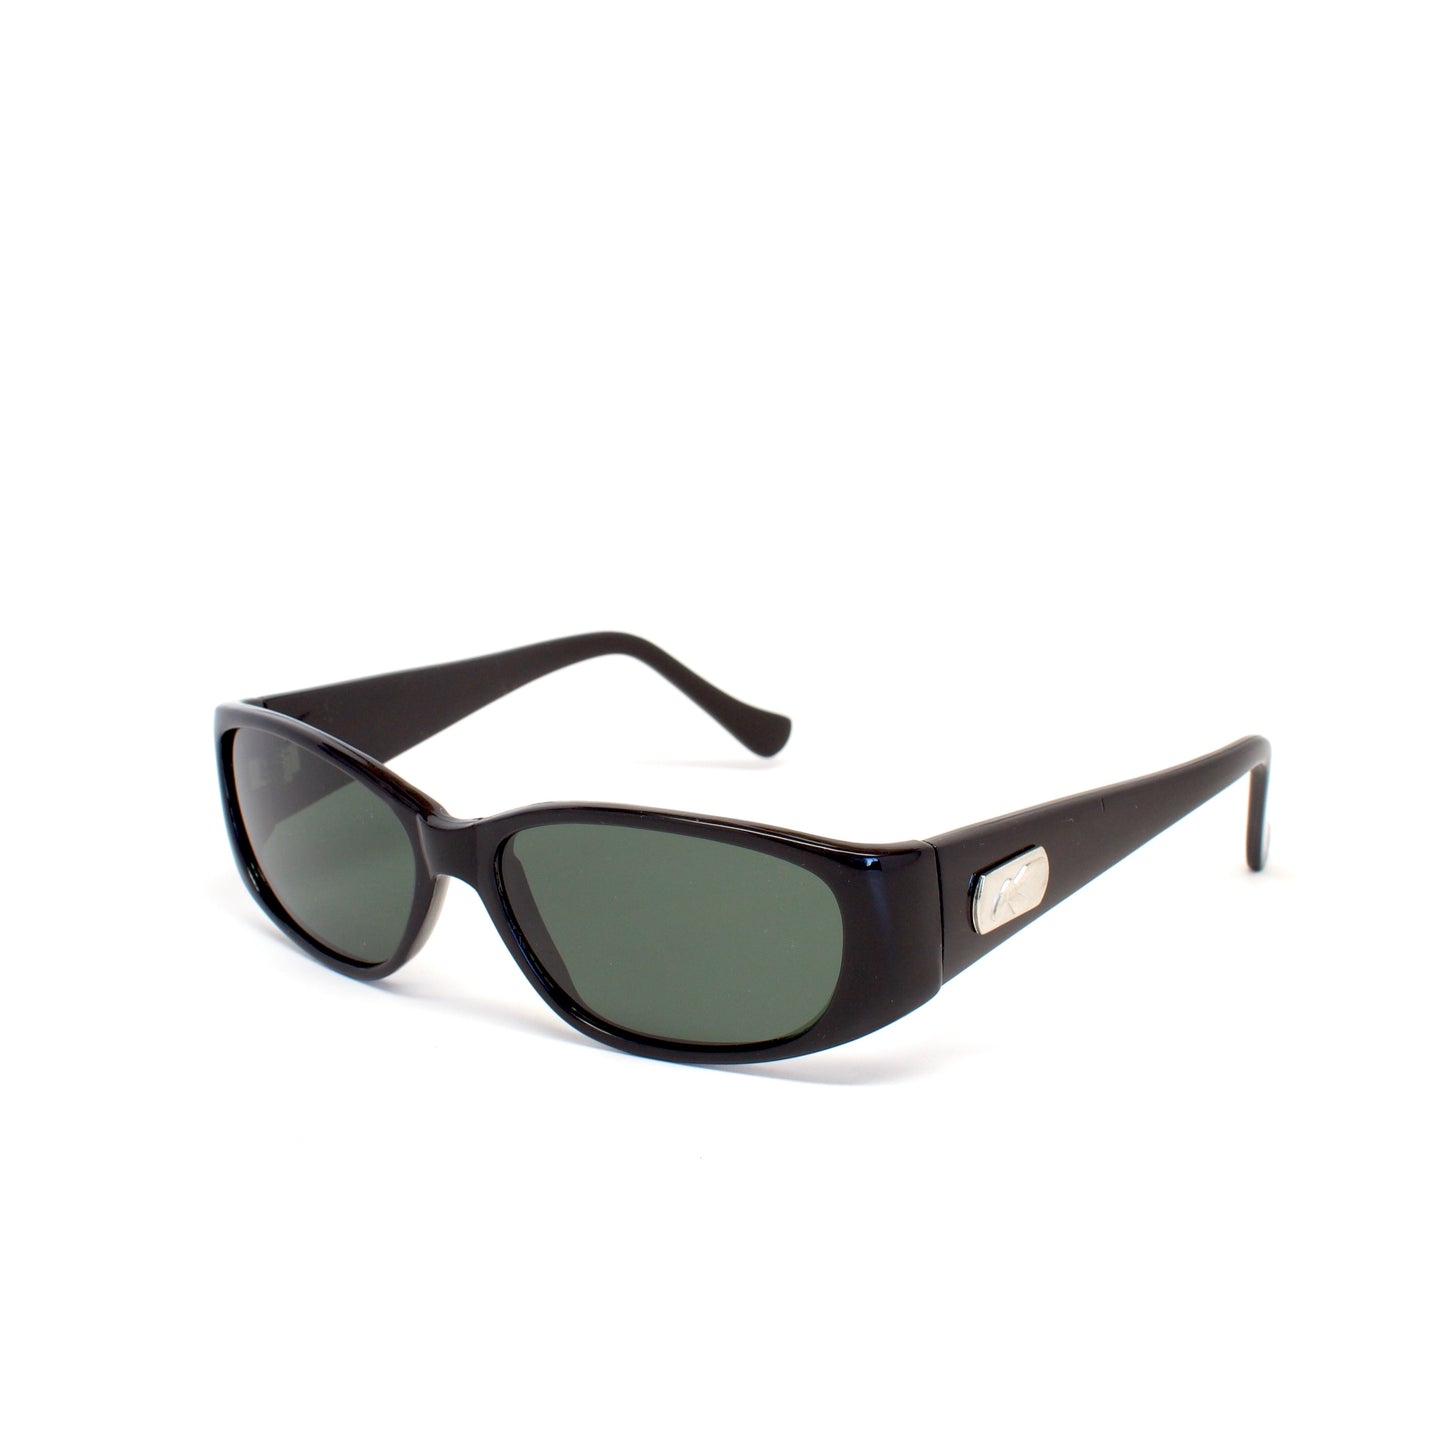 Vintage Standard Size 90s Mod Geometric Rectangle Sunglasses - Black